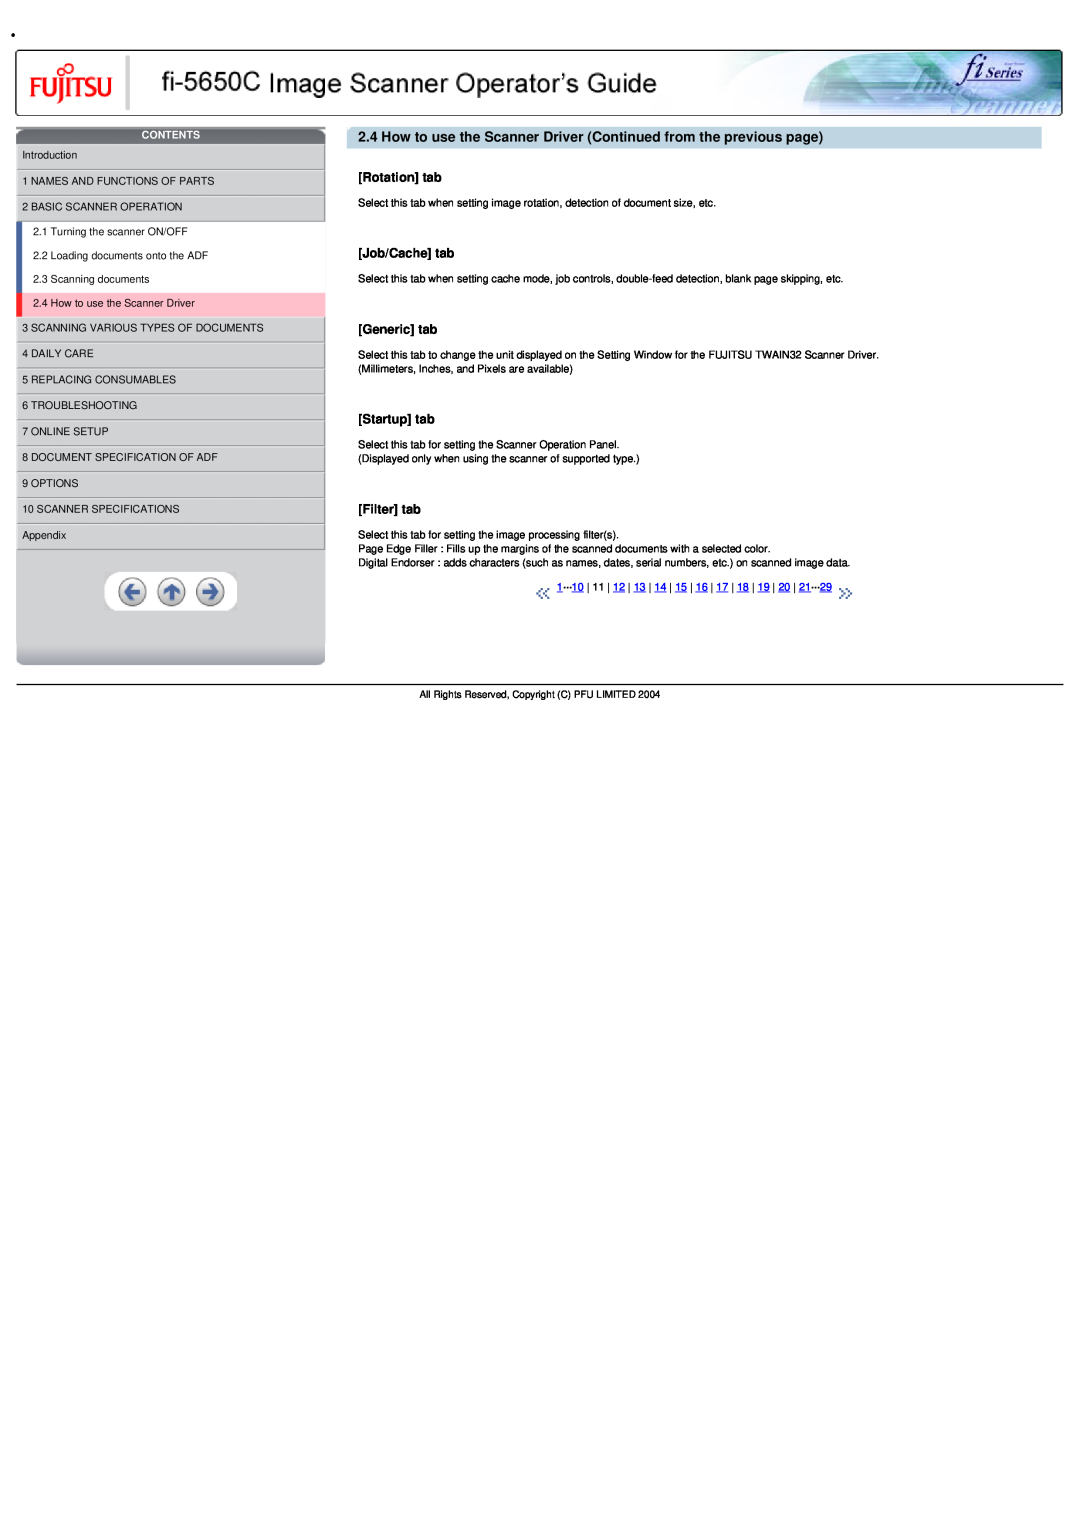 Fujitsu fi-5650C specifications Rotation tab, Job/Cache tab, Generic tab, Startup tab, Filter tab, Contents 